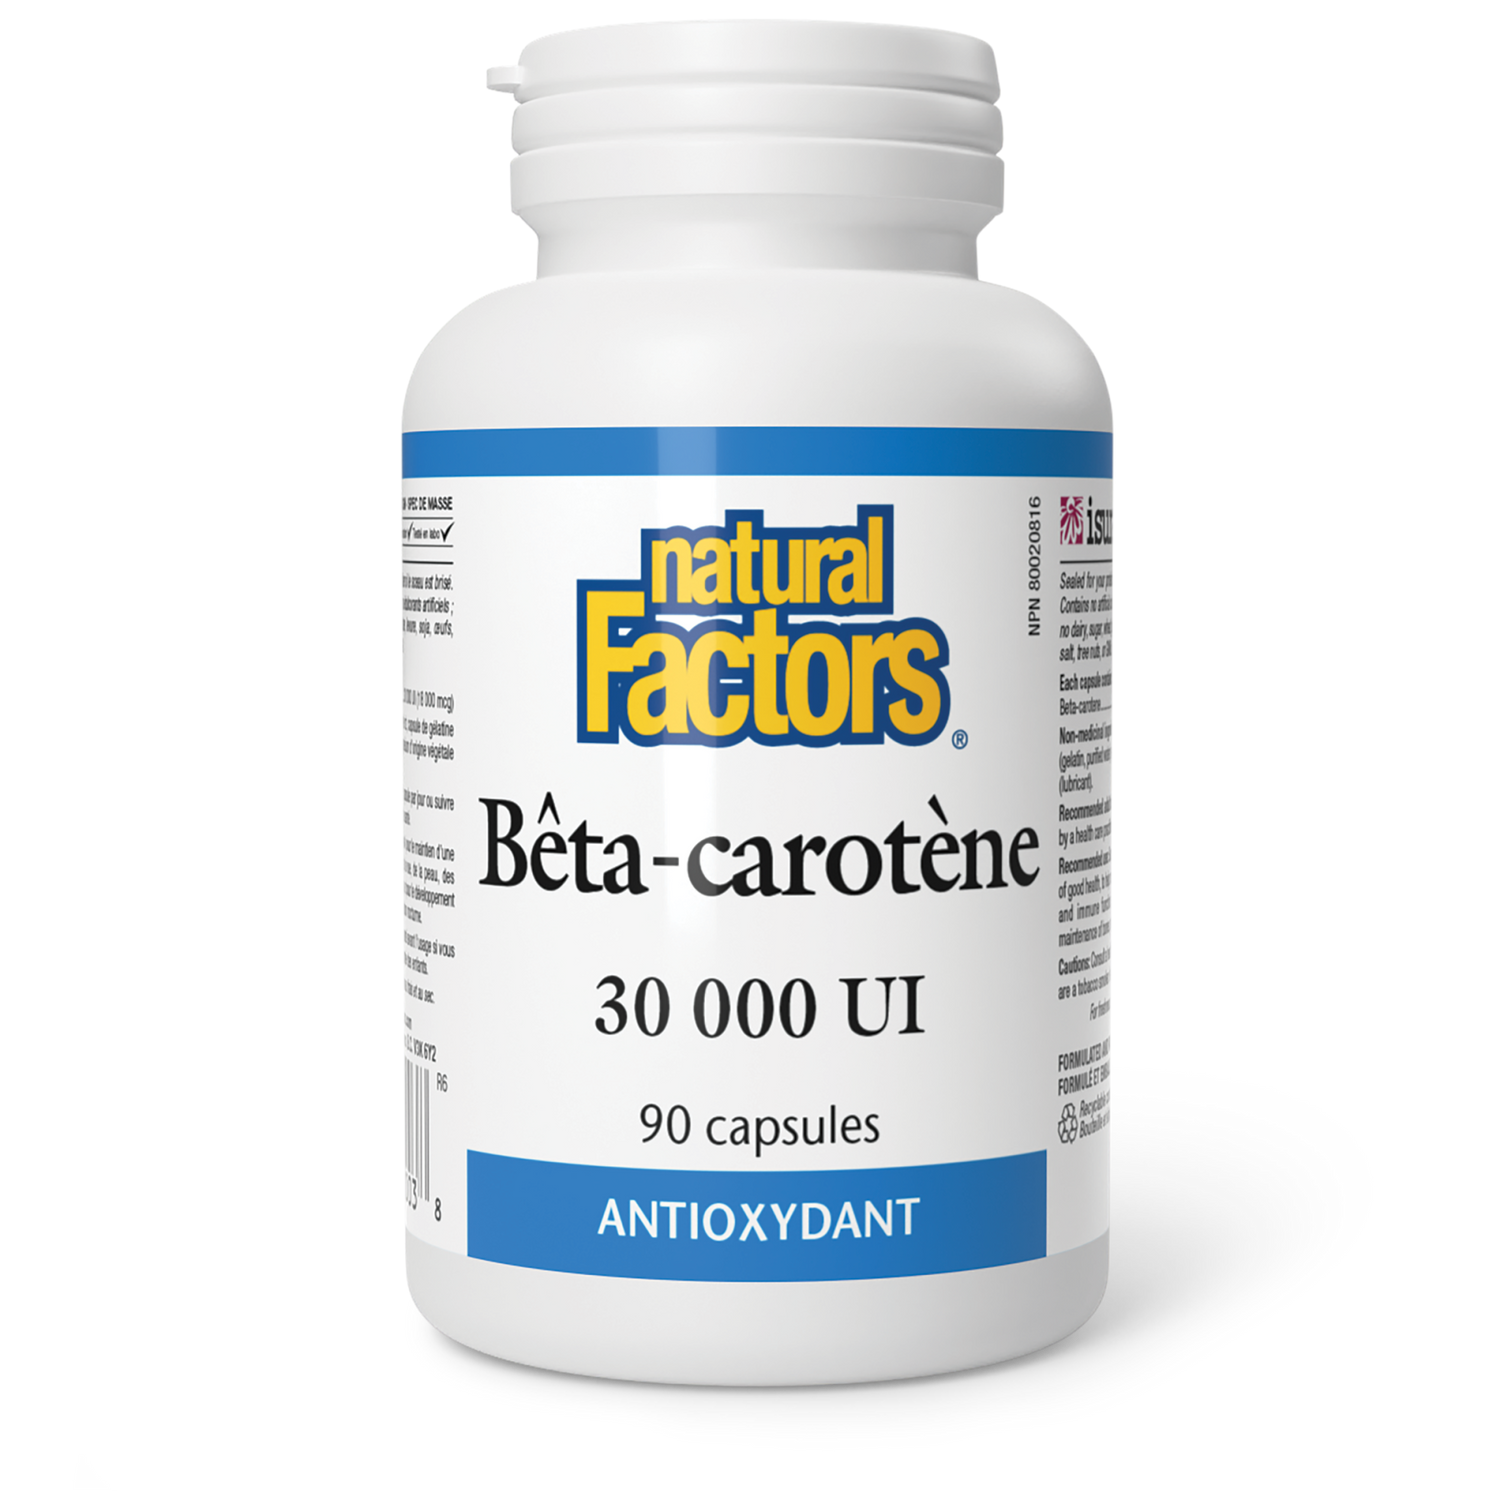 Bêta-carotène 30 000 UI, Natural Factors|v|image|1003